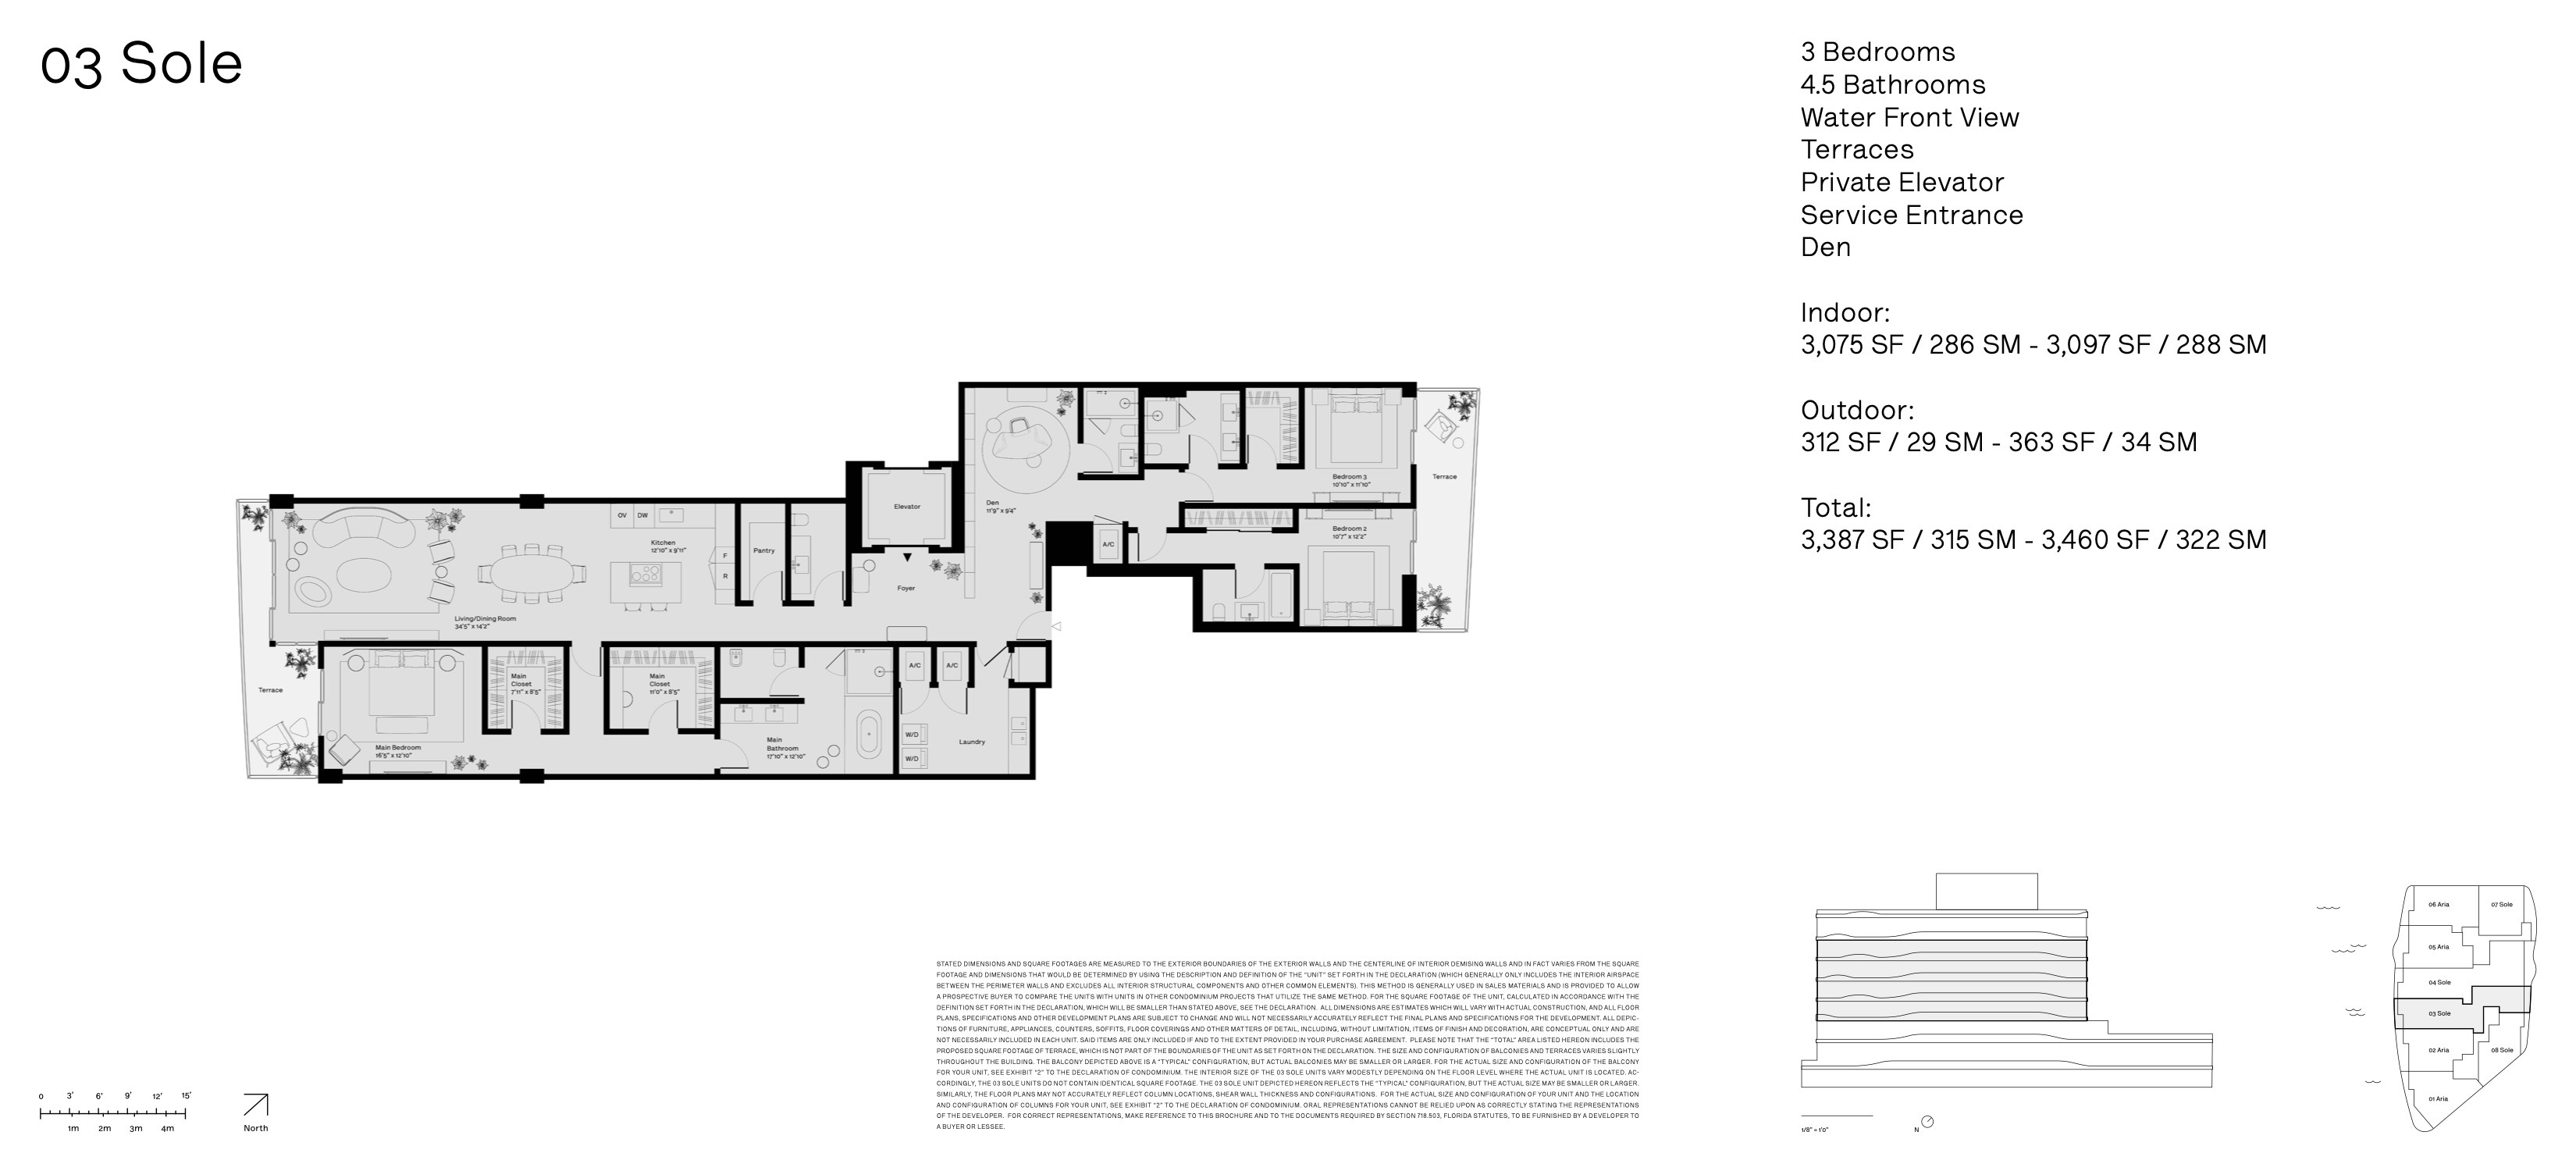 Floor Plan for Onda Residences Miami Floorplans, 03 Sole